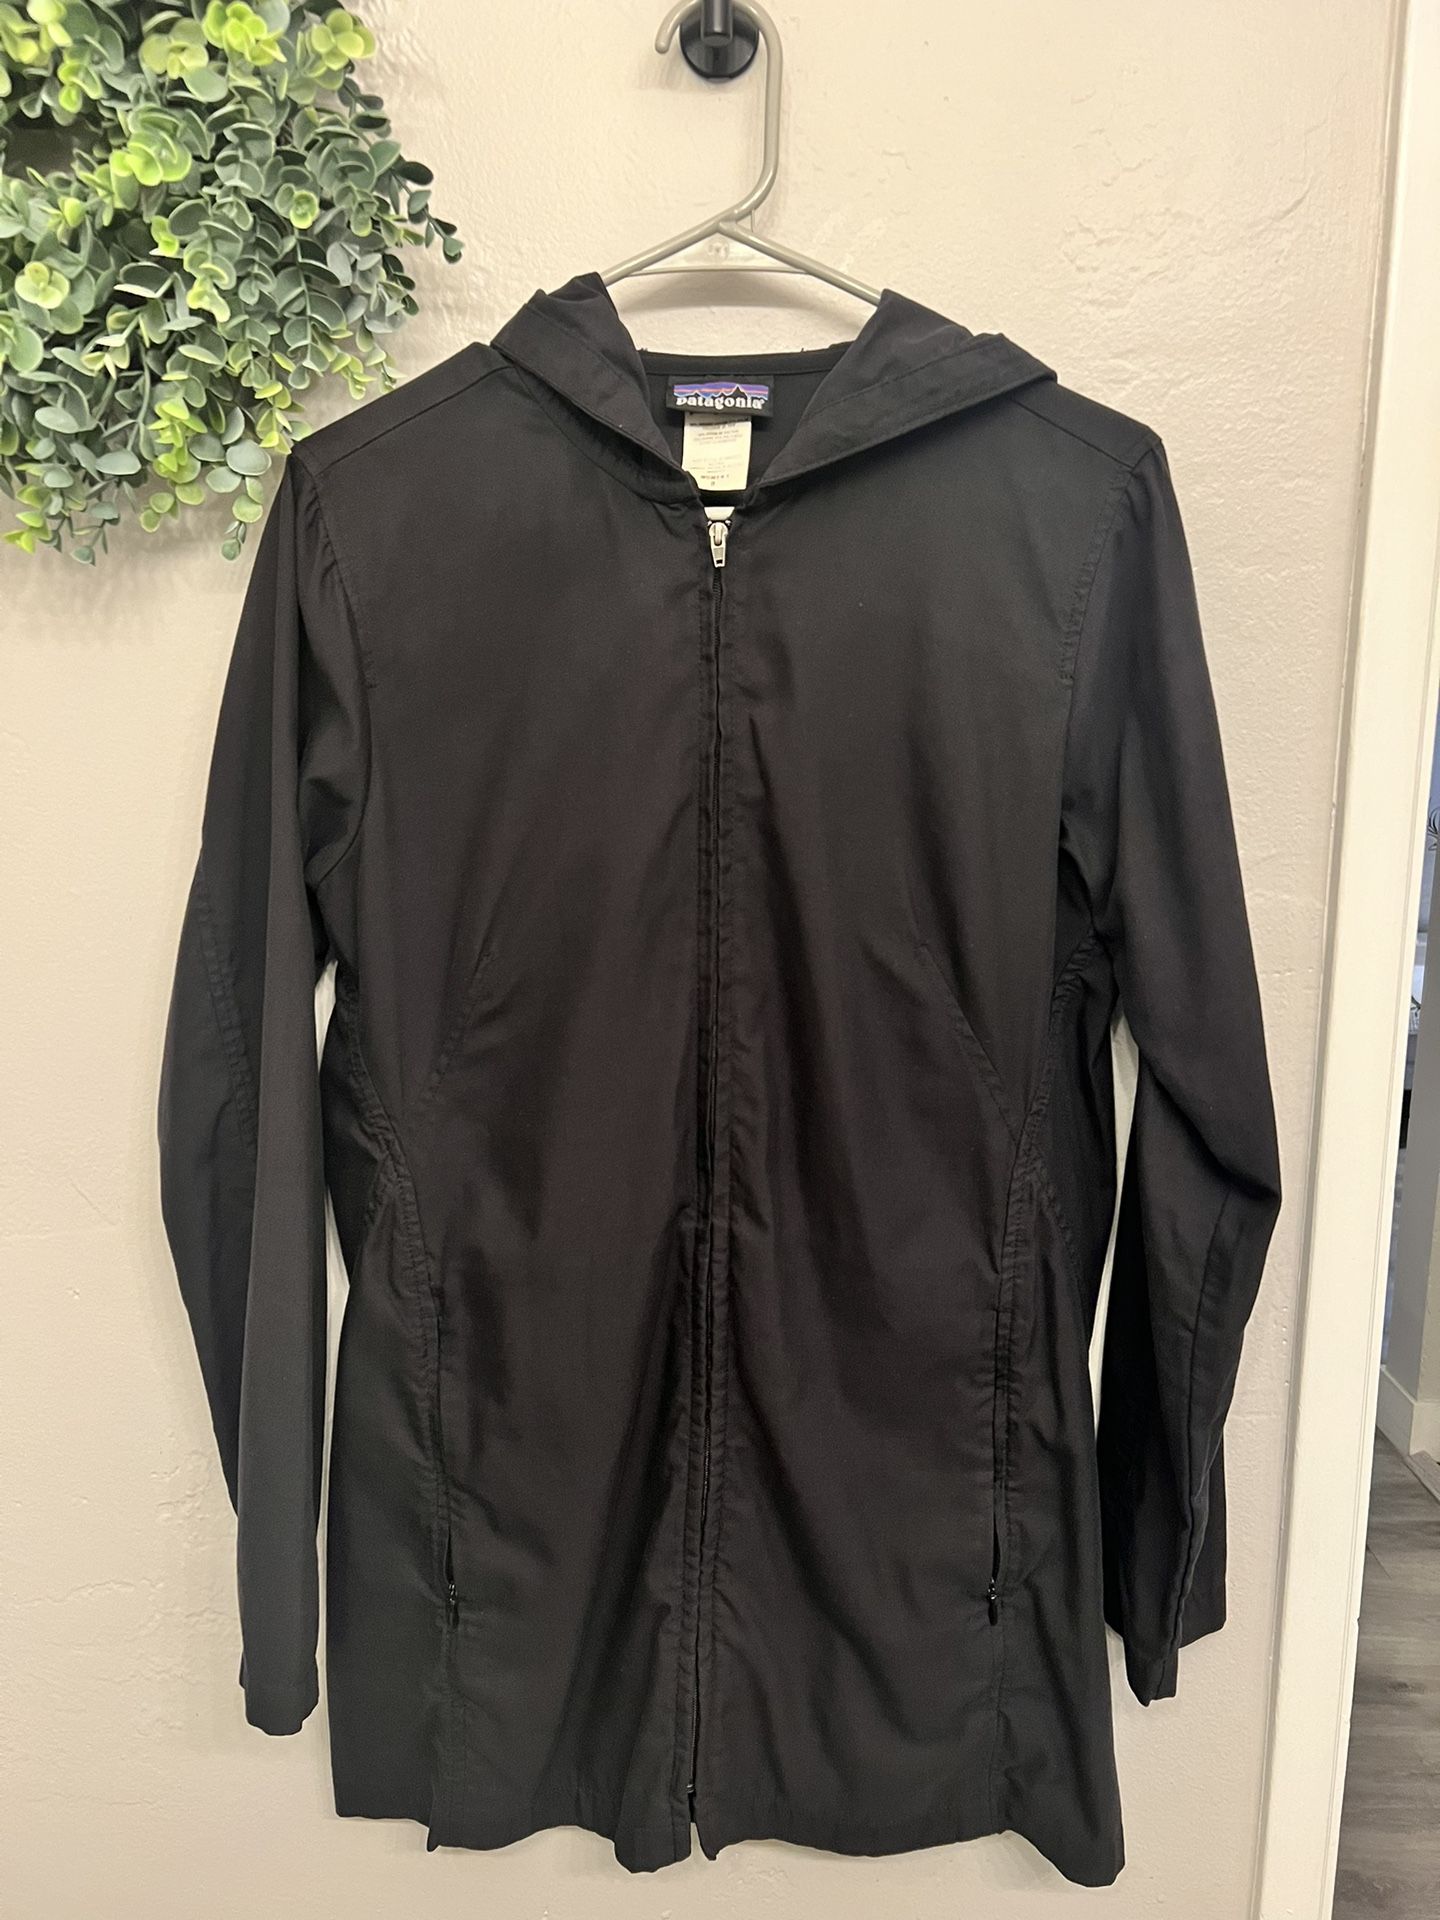 Patagonia Black/Dark Navy Cotton Canvas Blend Jacket Size 8